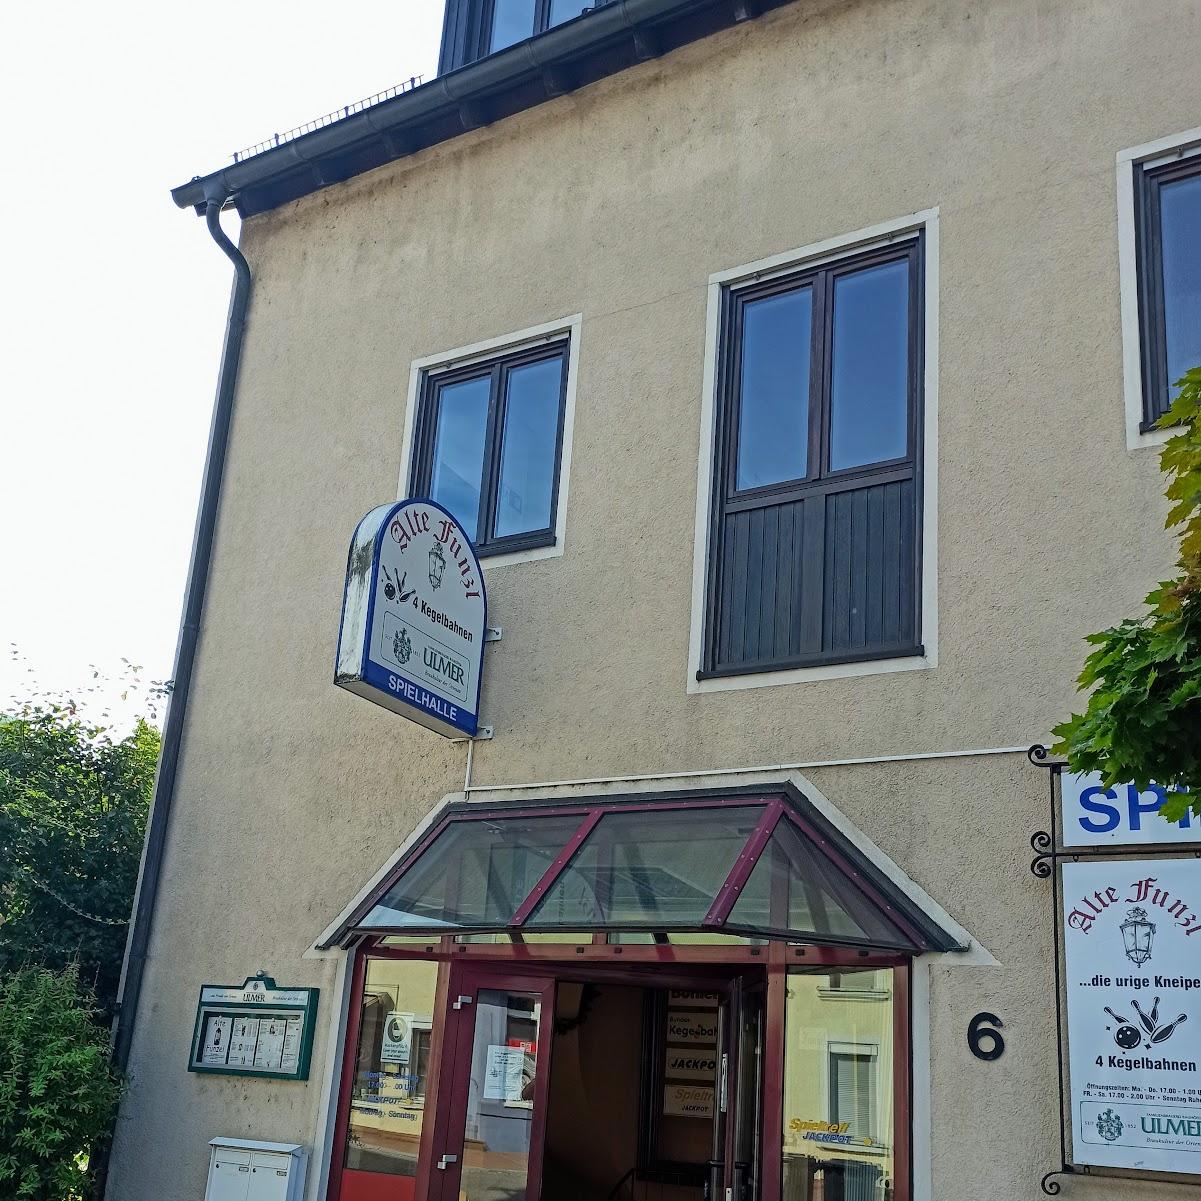 Restaurant "Alte Funzel" in Bühl